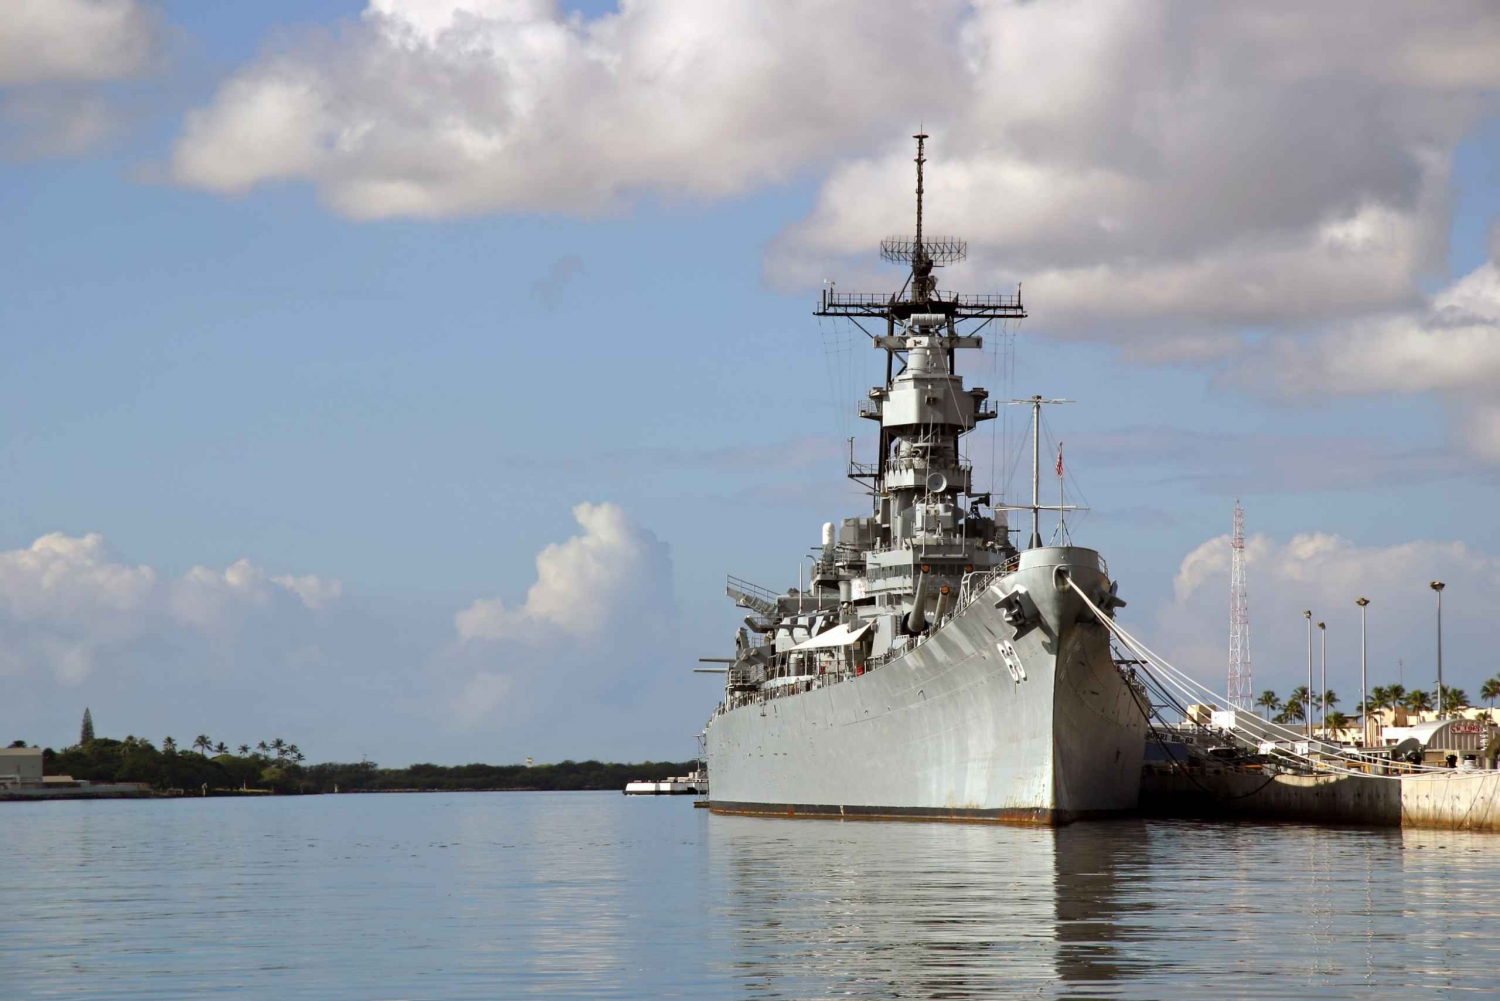 Oahu: Pearl Harbor, USS Arizona, Might Mo och Honolulu Tour